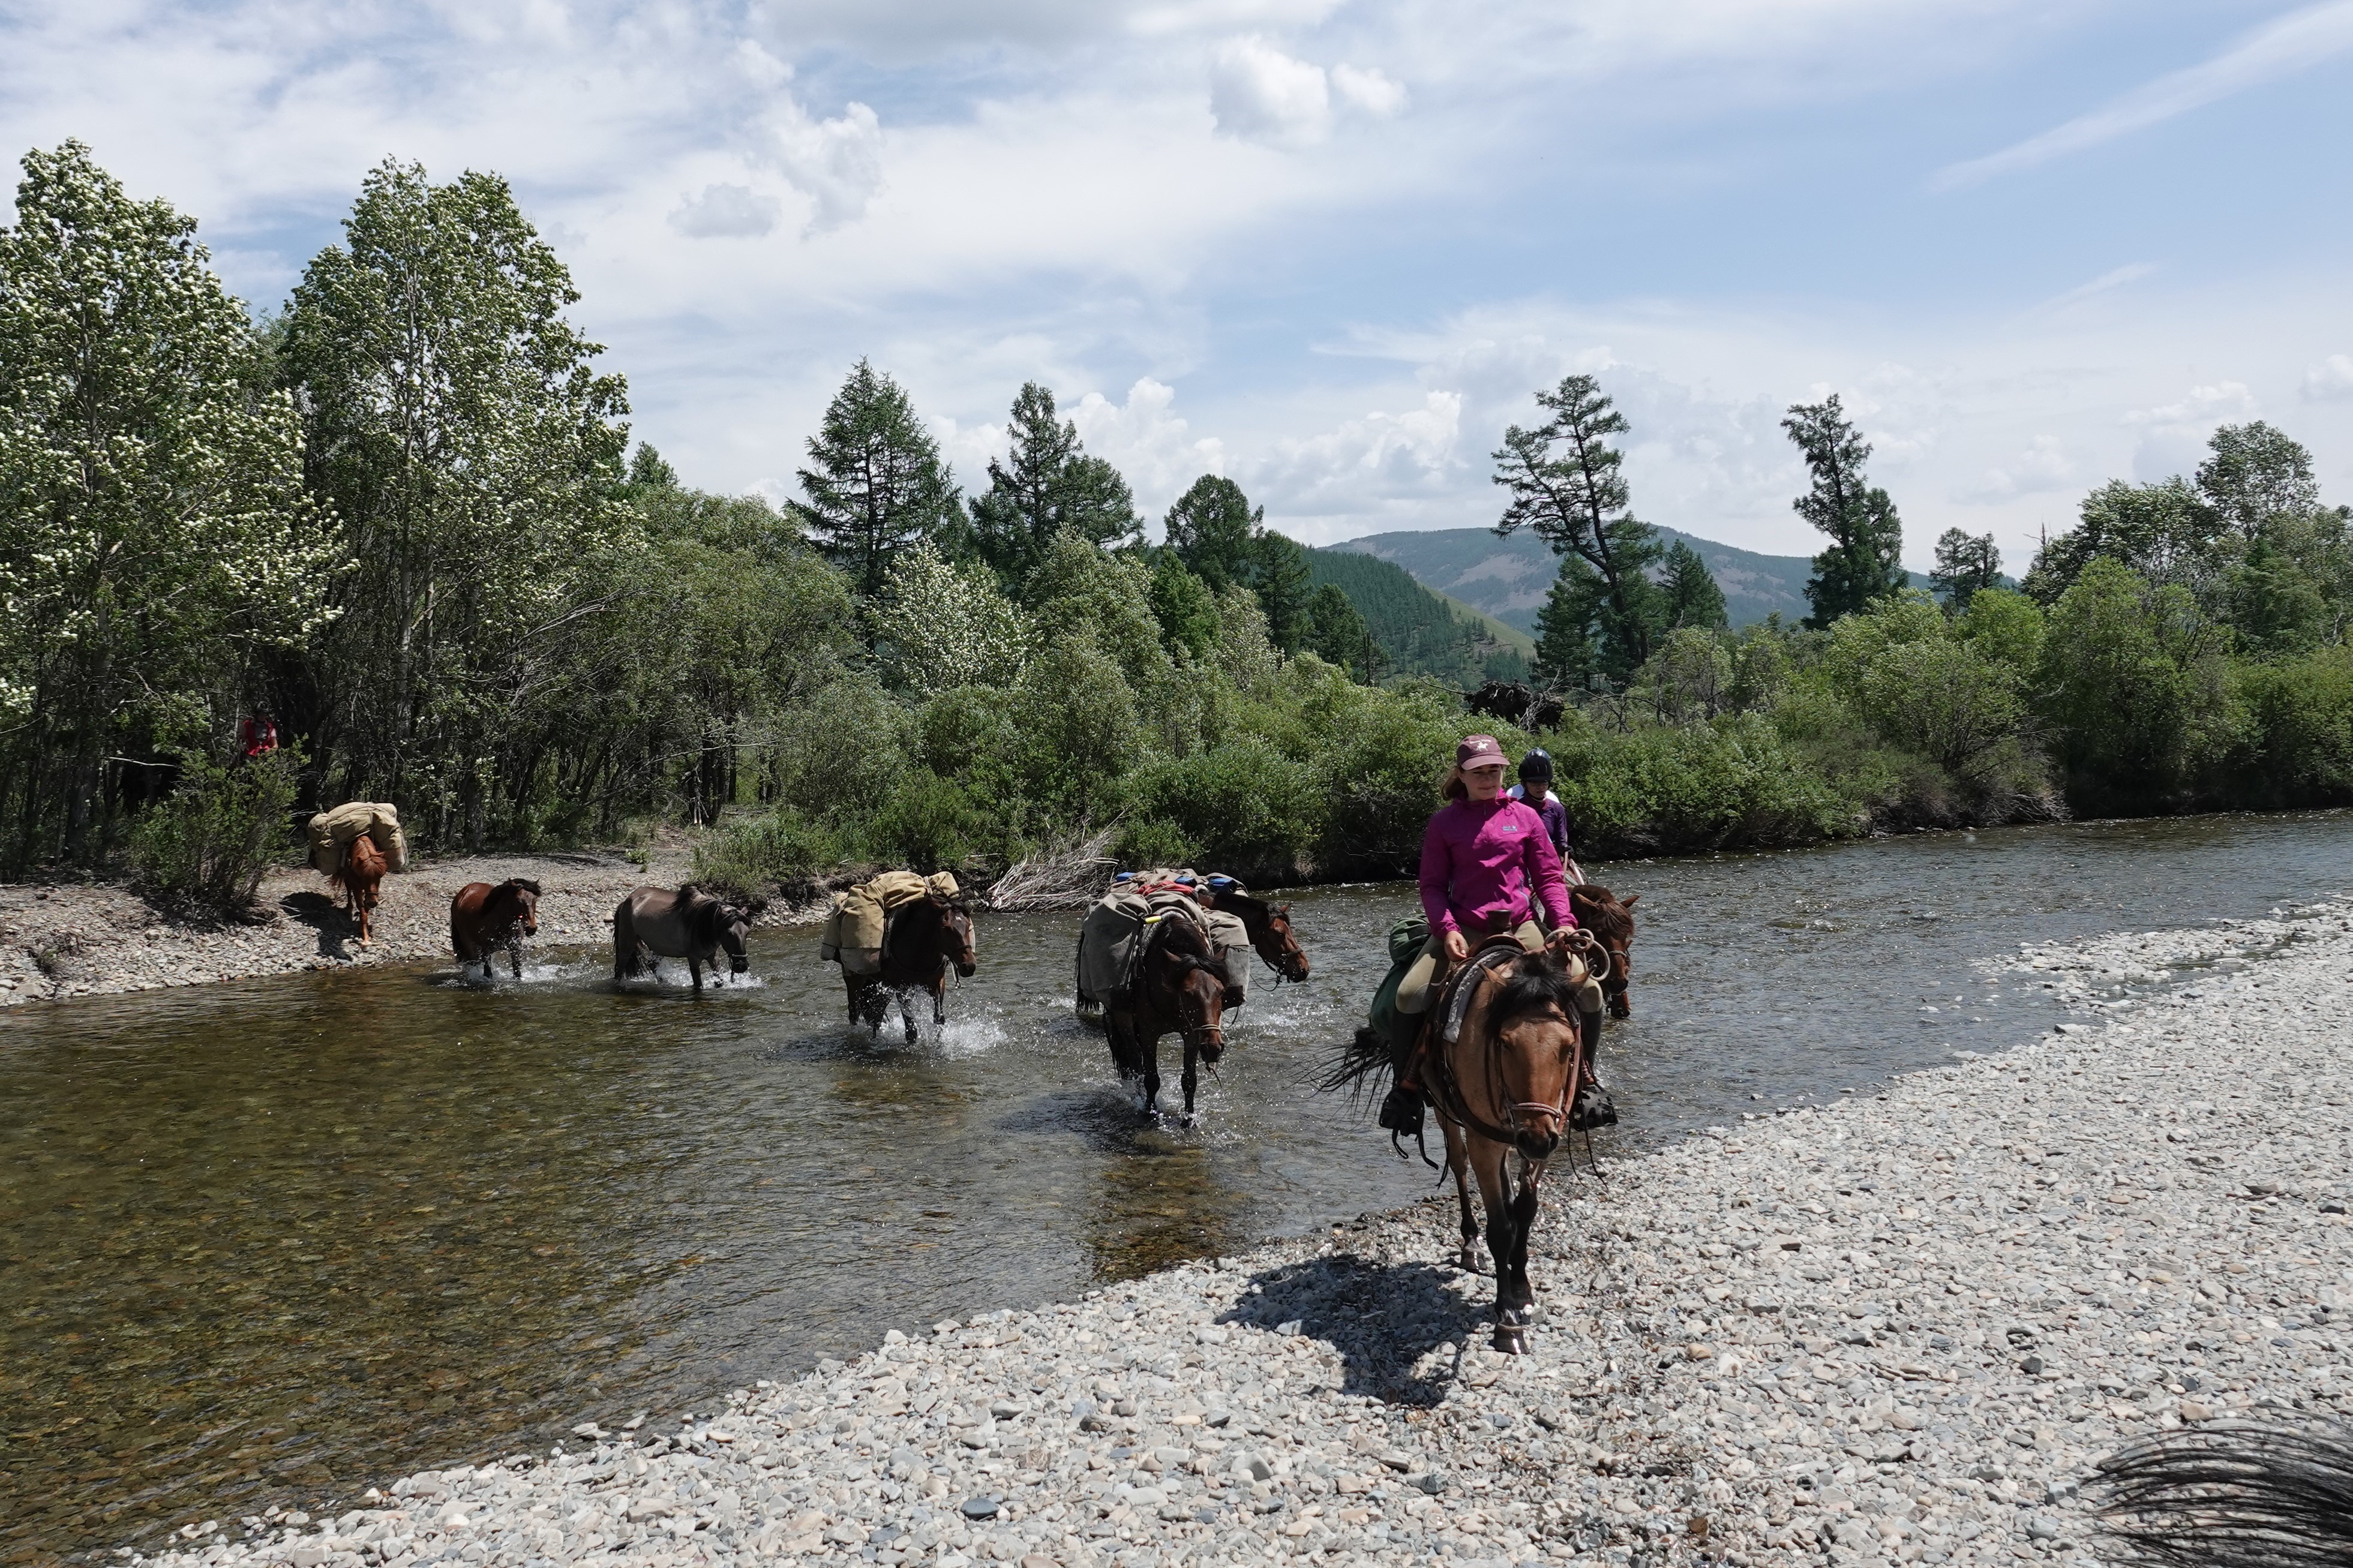 Mongolia Covid-19 Information, Stone Horse Expeditions, Horseback Treks 2020, 2021